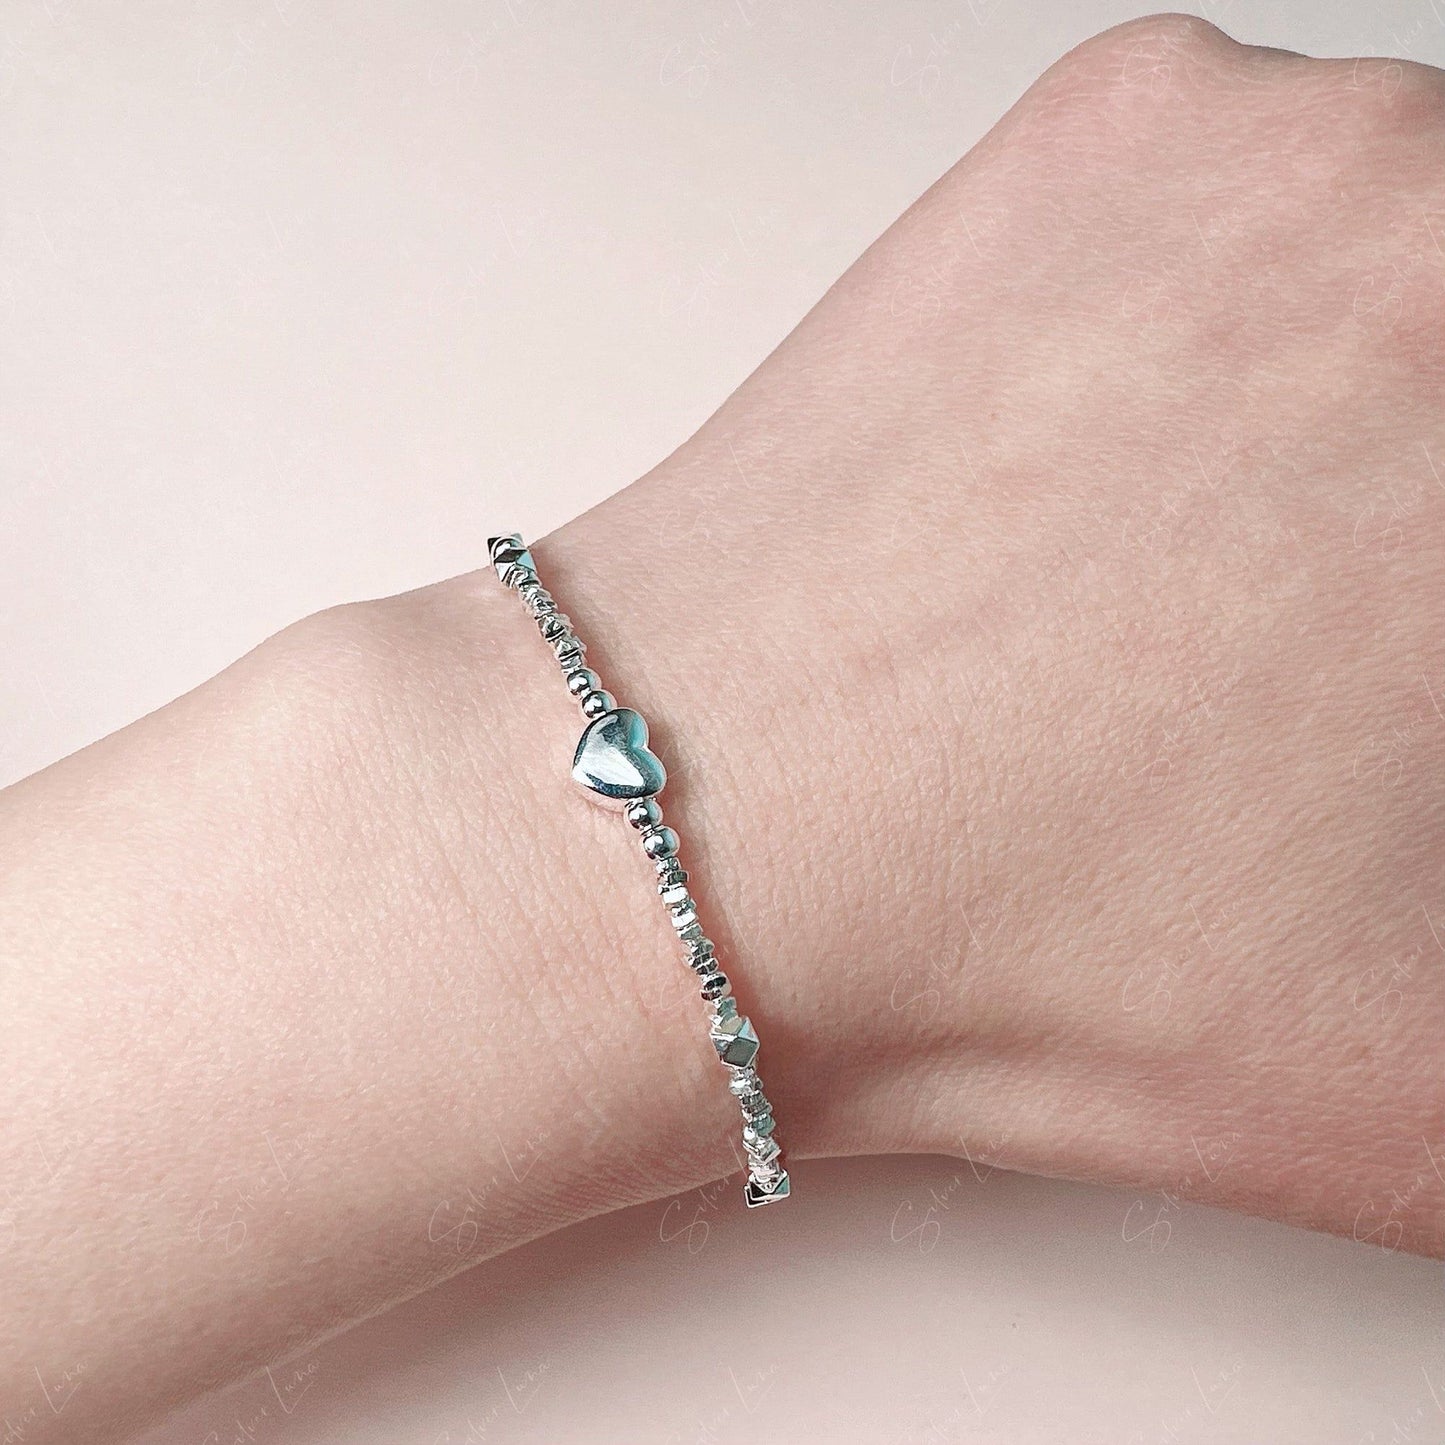 Ball bead heart silver bracelet